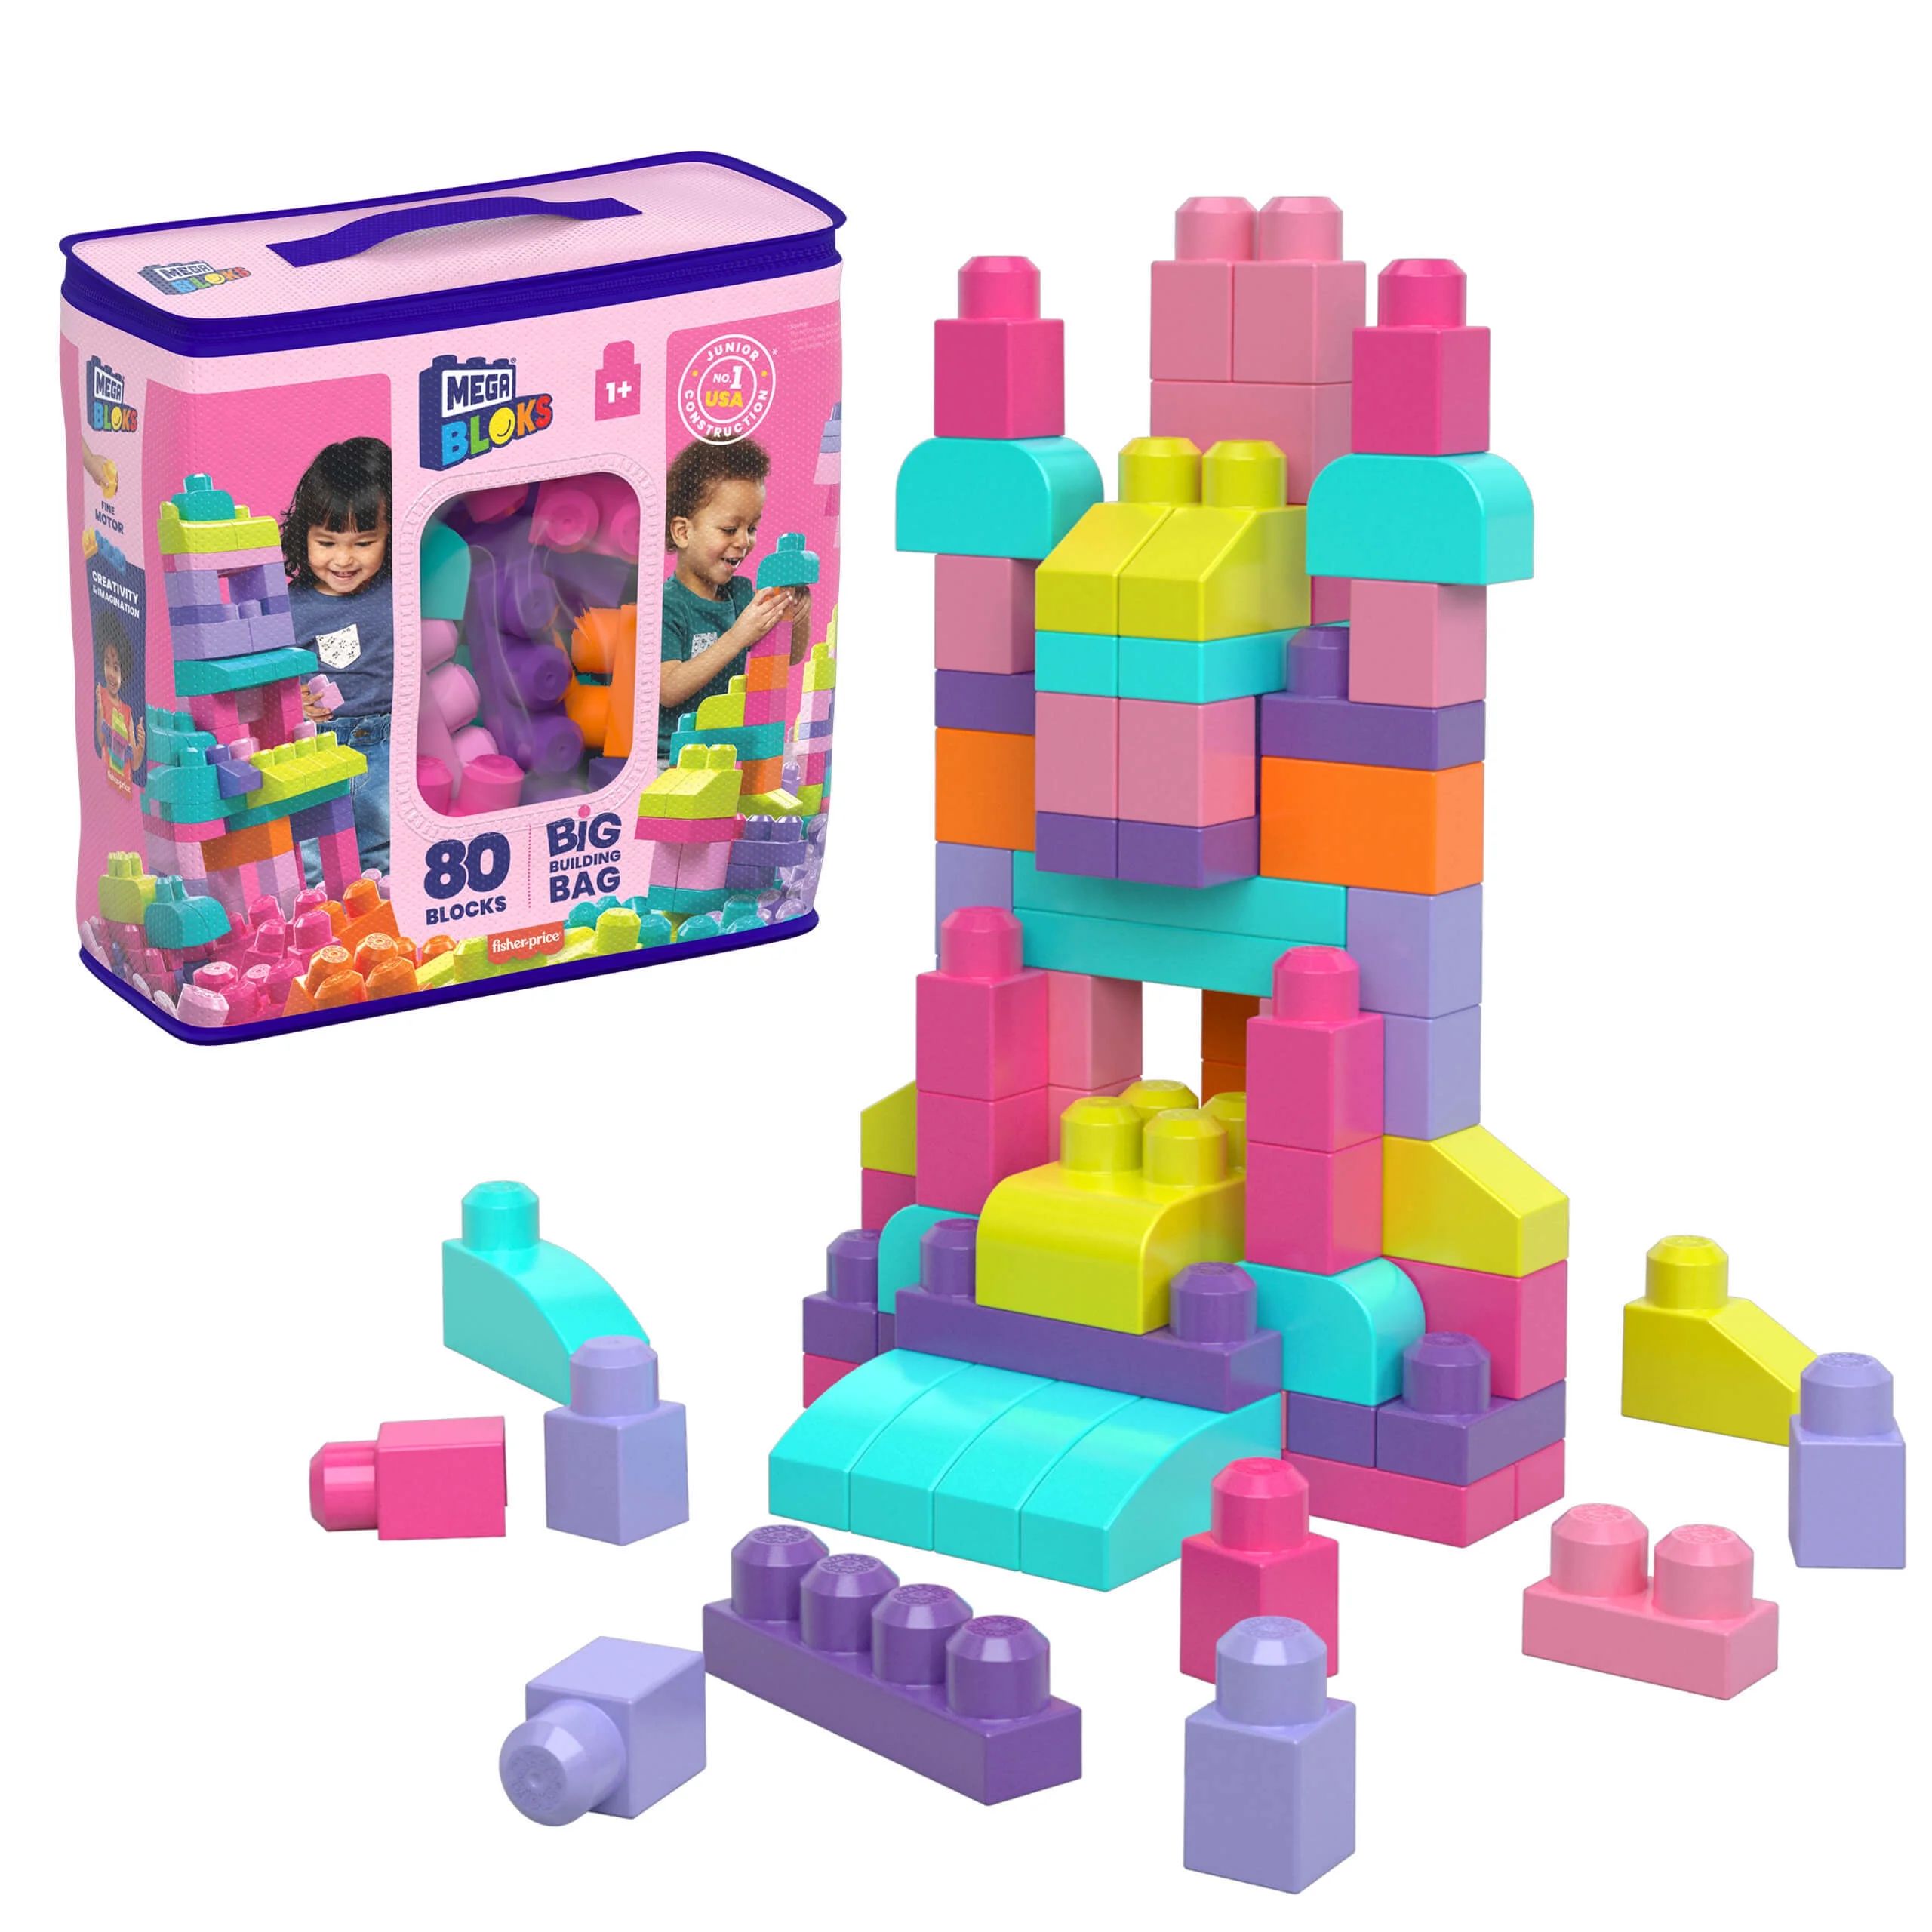 MEGA BLOKS Fisher-Price Big Building Bag, Building Blocks for Toddlers With Storage (80 Pieces), ... | Walmart (US)